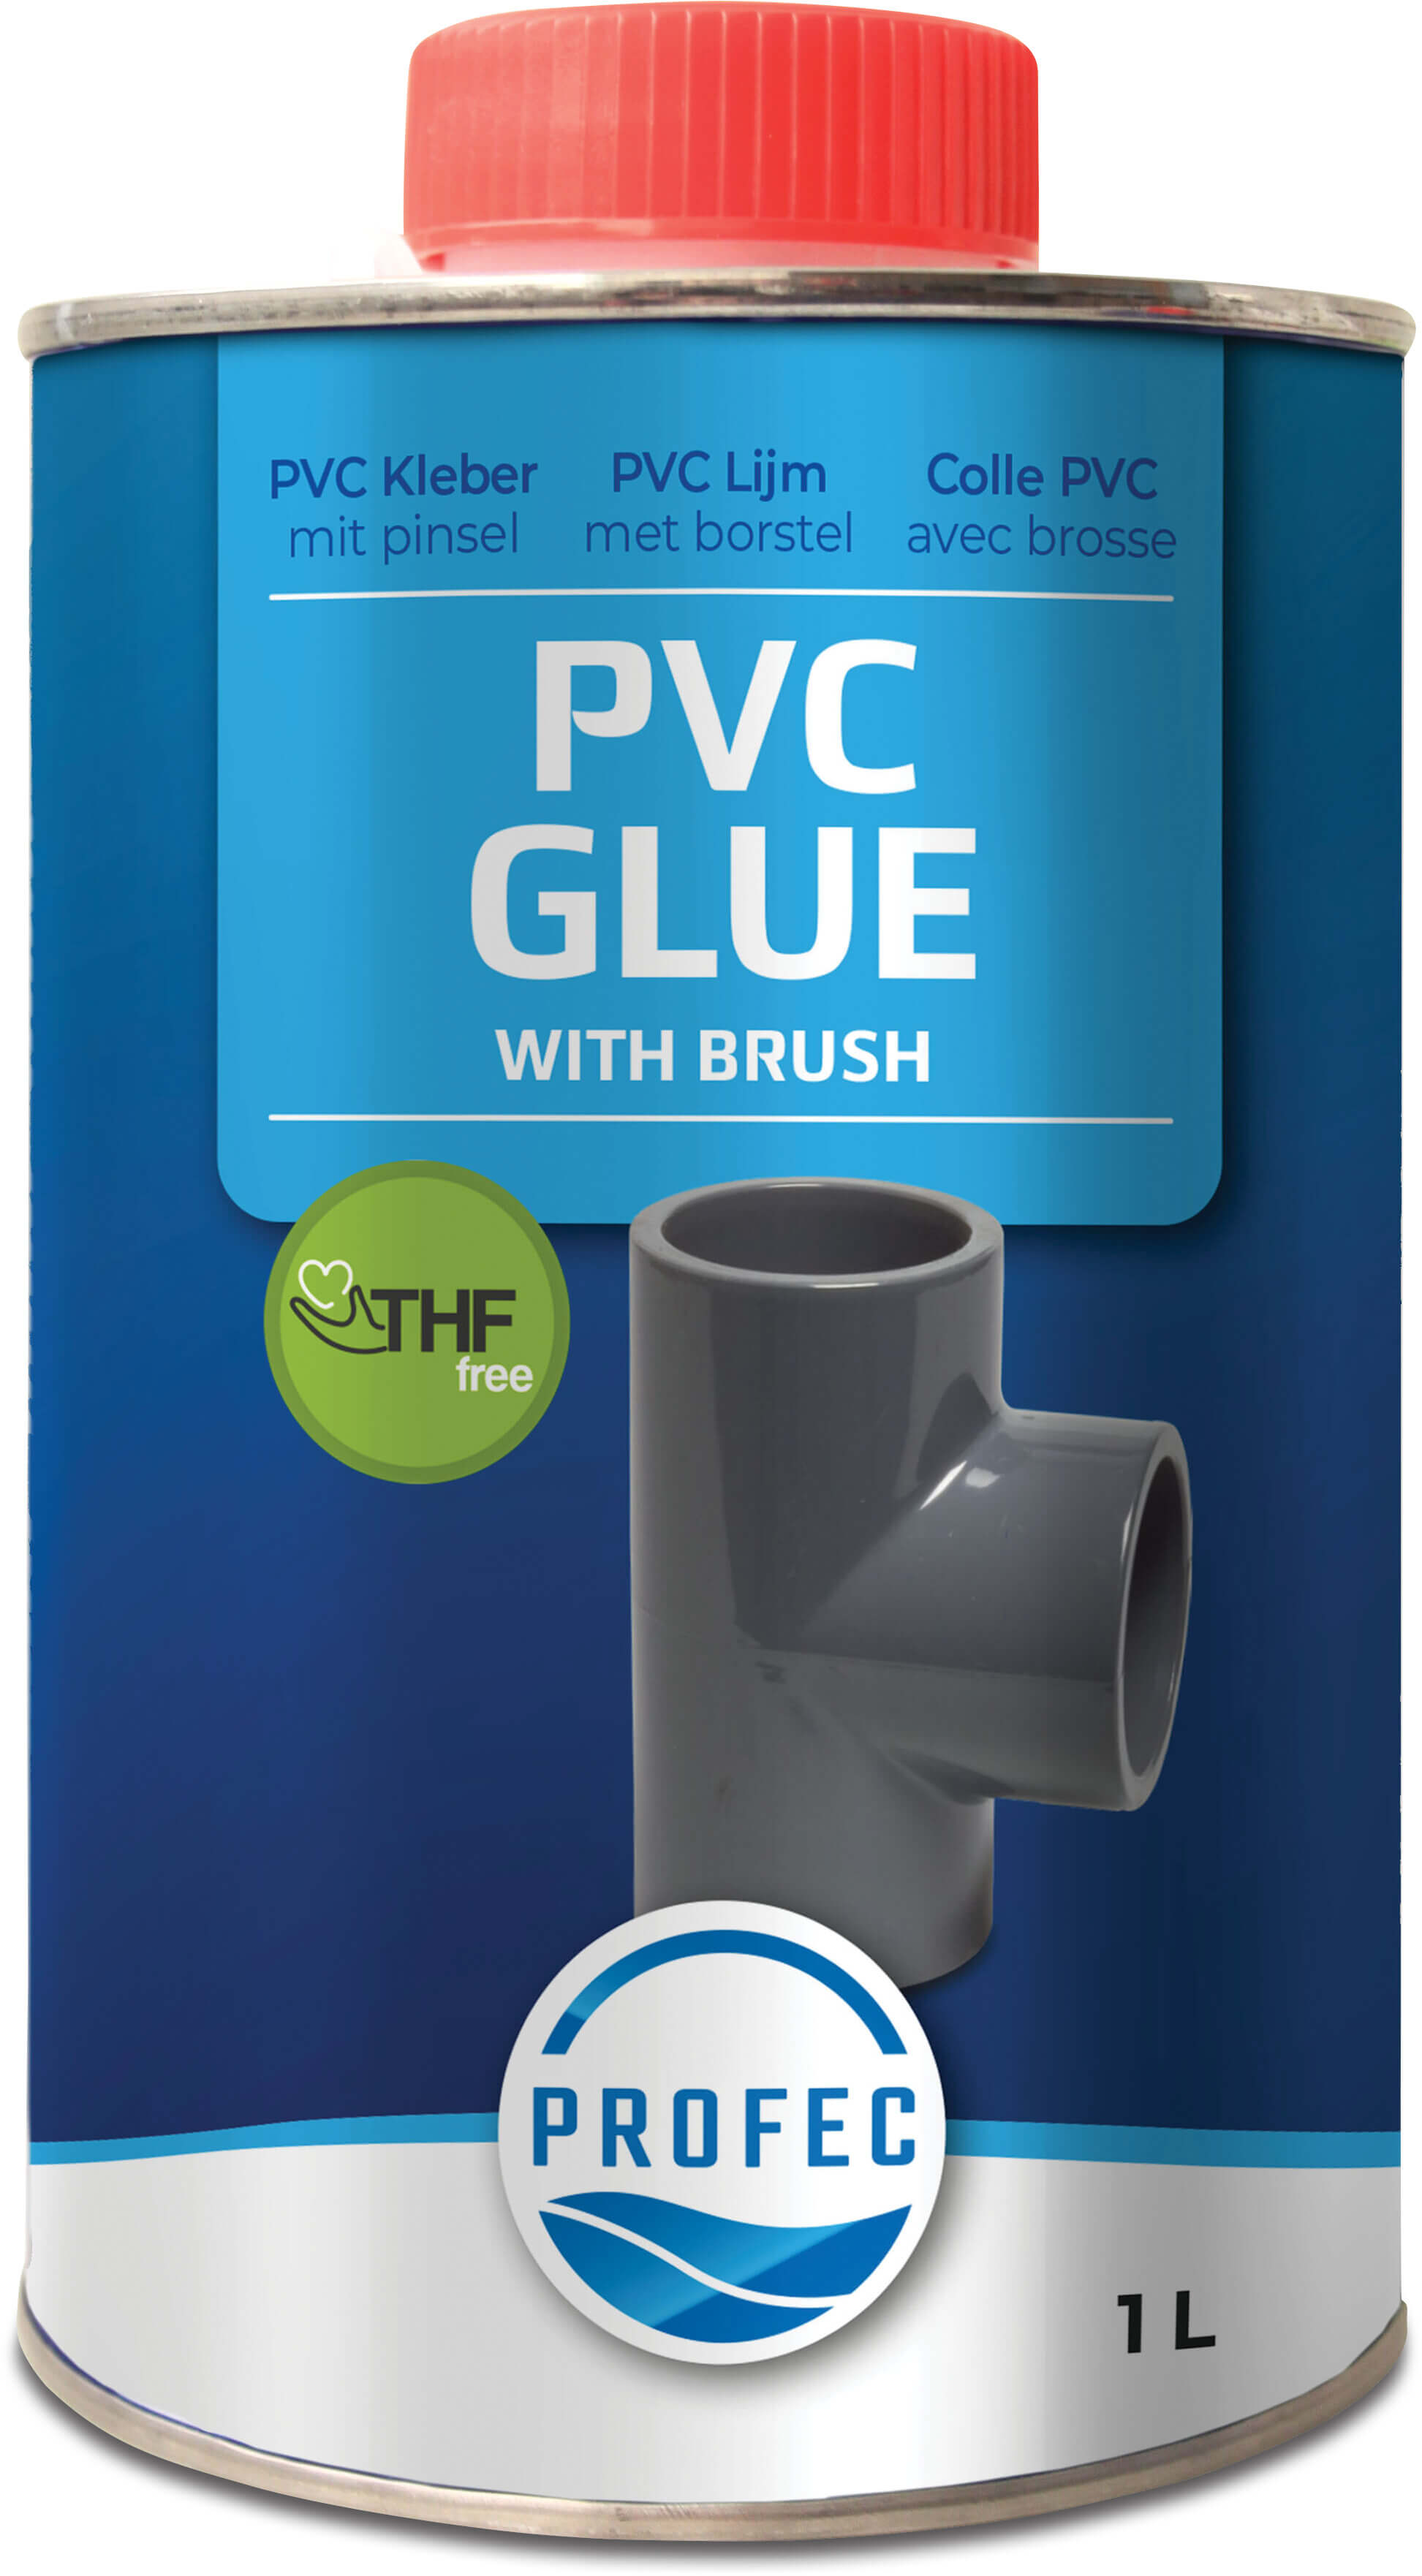 Profec PVC glue 0,25ltr with brush type THF free label PL/DK/SE